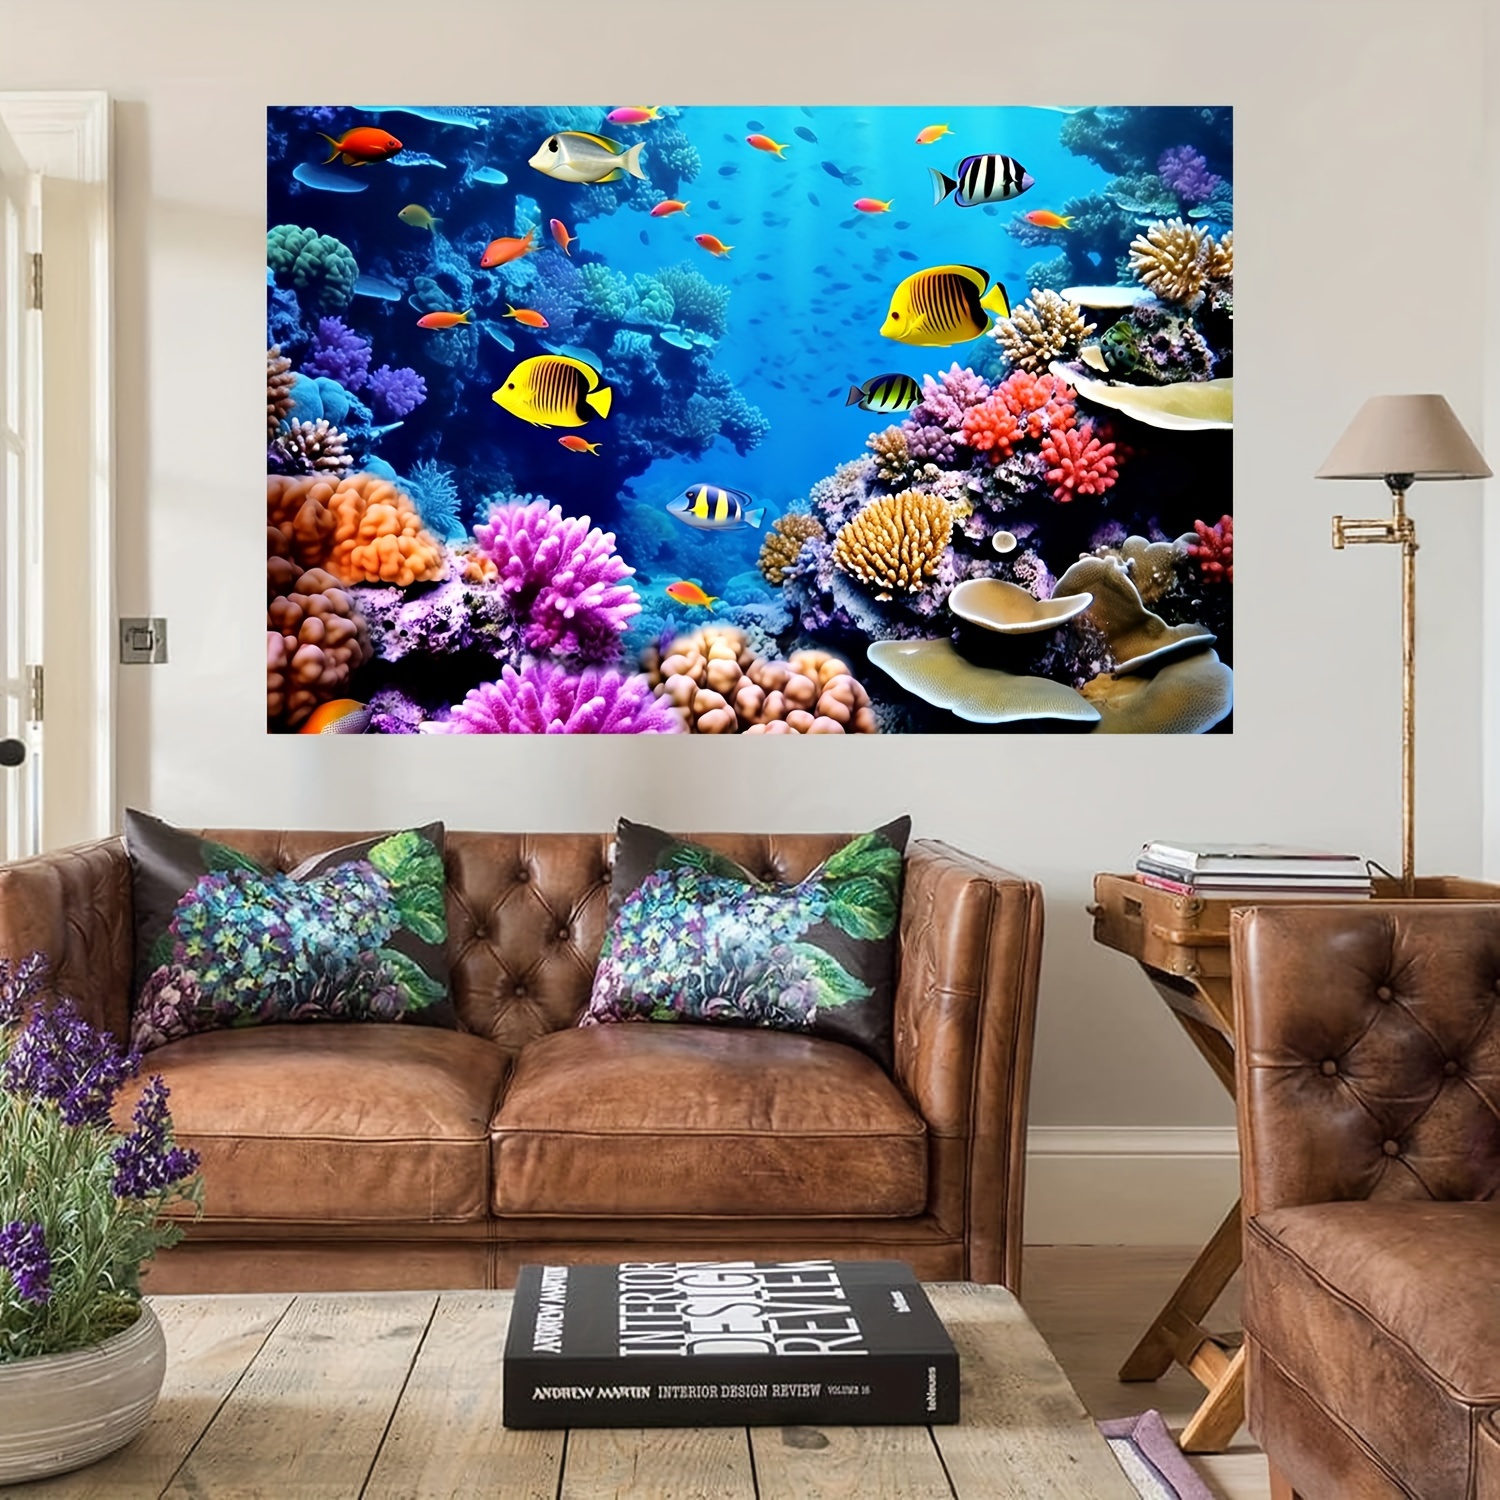 Seaweed metal wall hanging, seaweed wall decor, beach house decor, coastal  themed decor, finding Nemo decor, children’s room decor